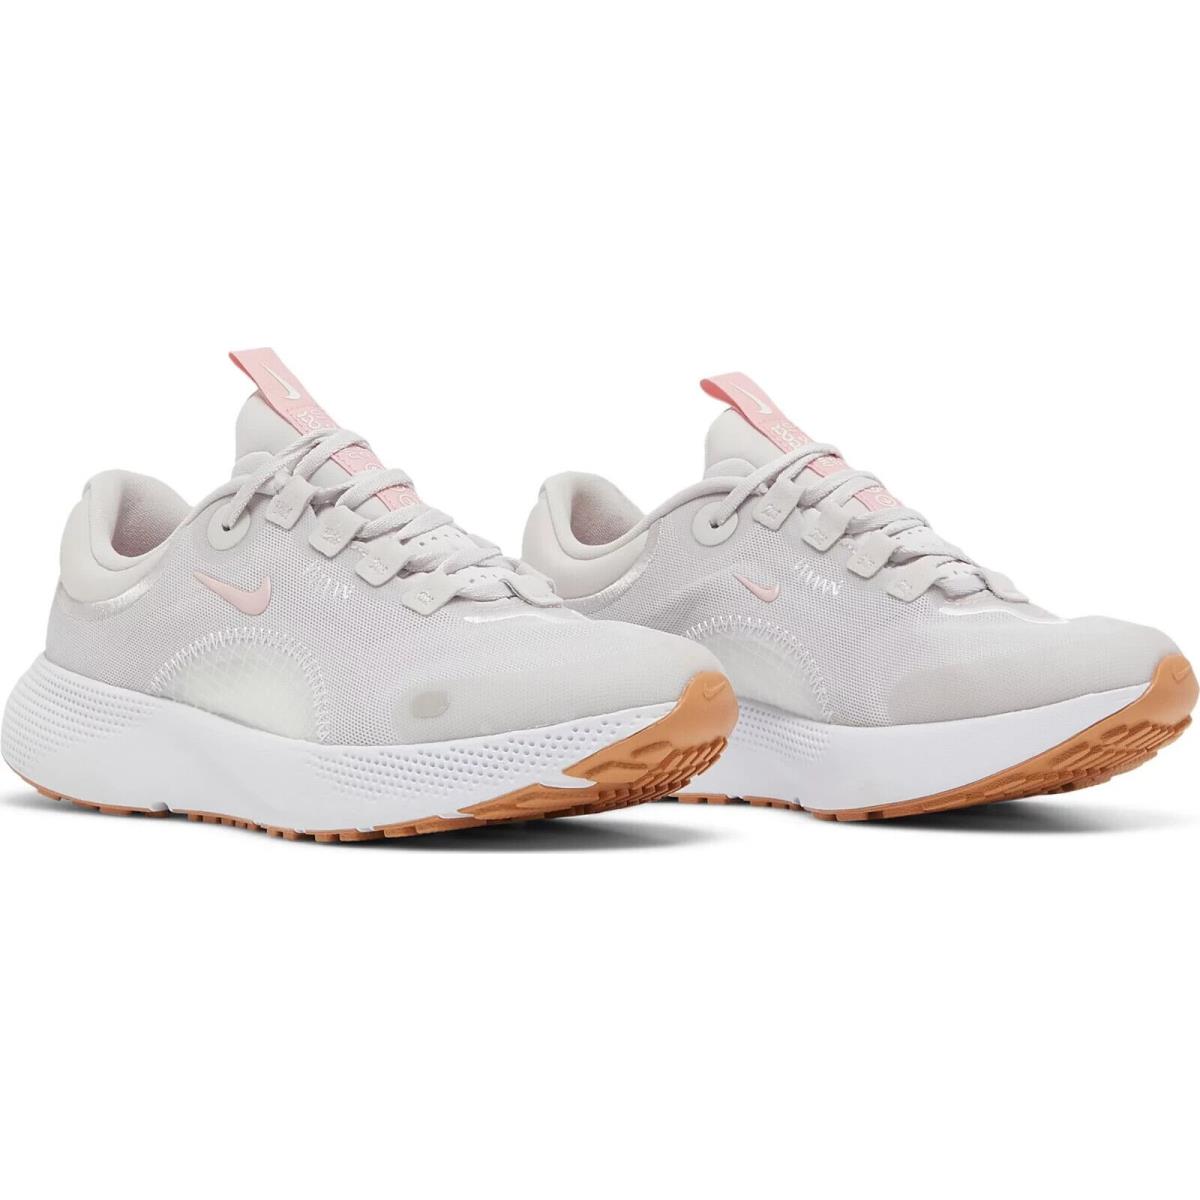 Nike React Escape Run Running Shoes White Grey Pink CV3817 003 - Size 8 Womens